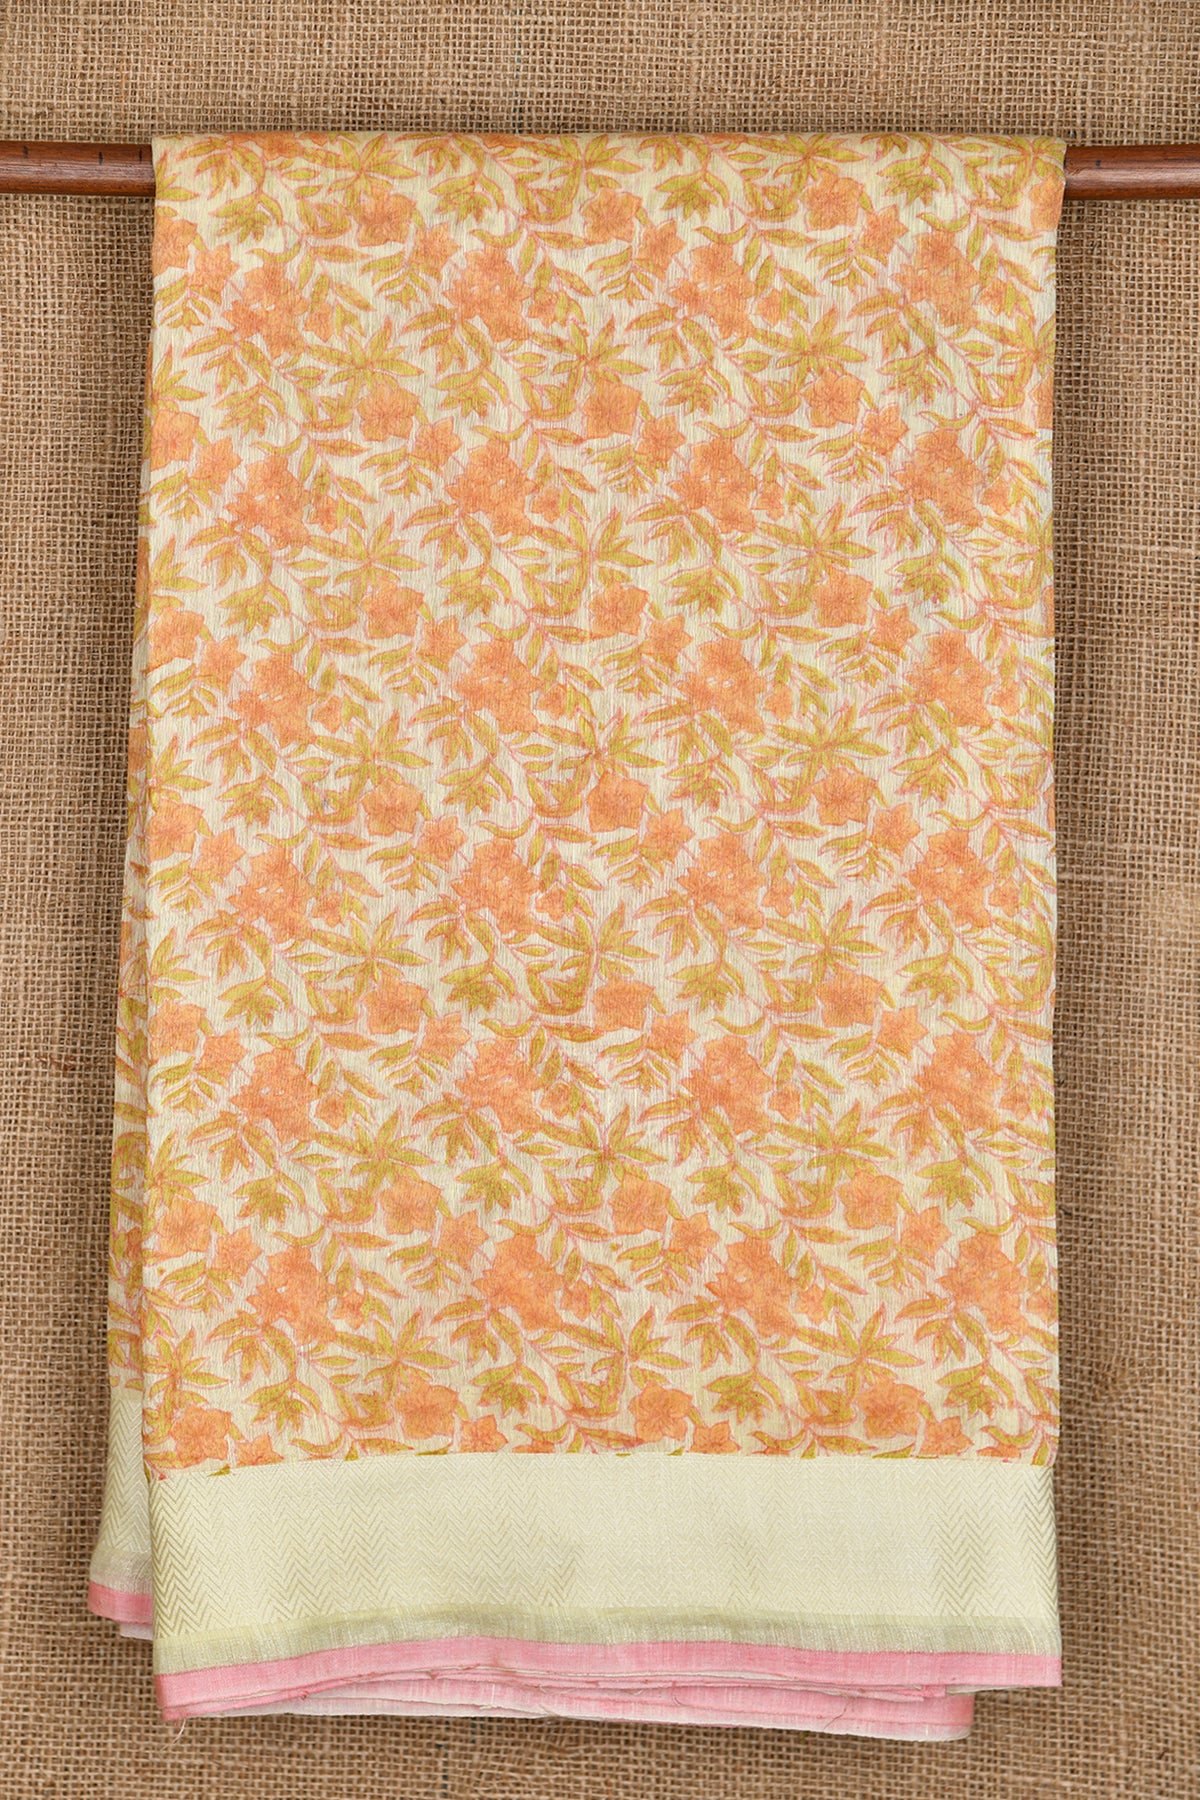 Thread Work Chevron Border With Botanical Digital Printed Cream And Peach Orange Linen Cotton Saree